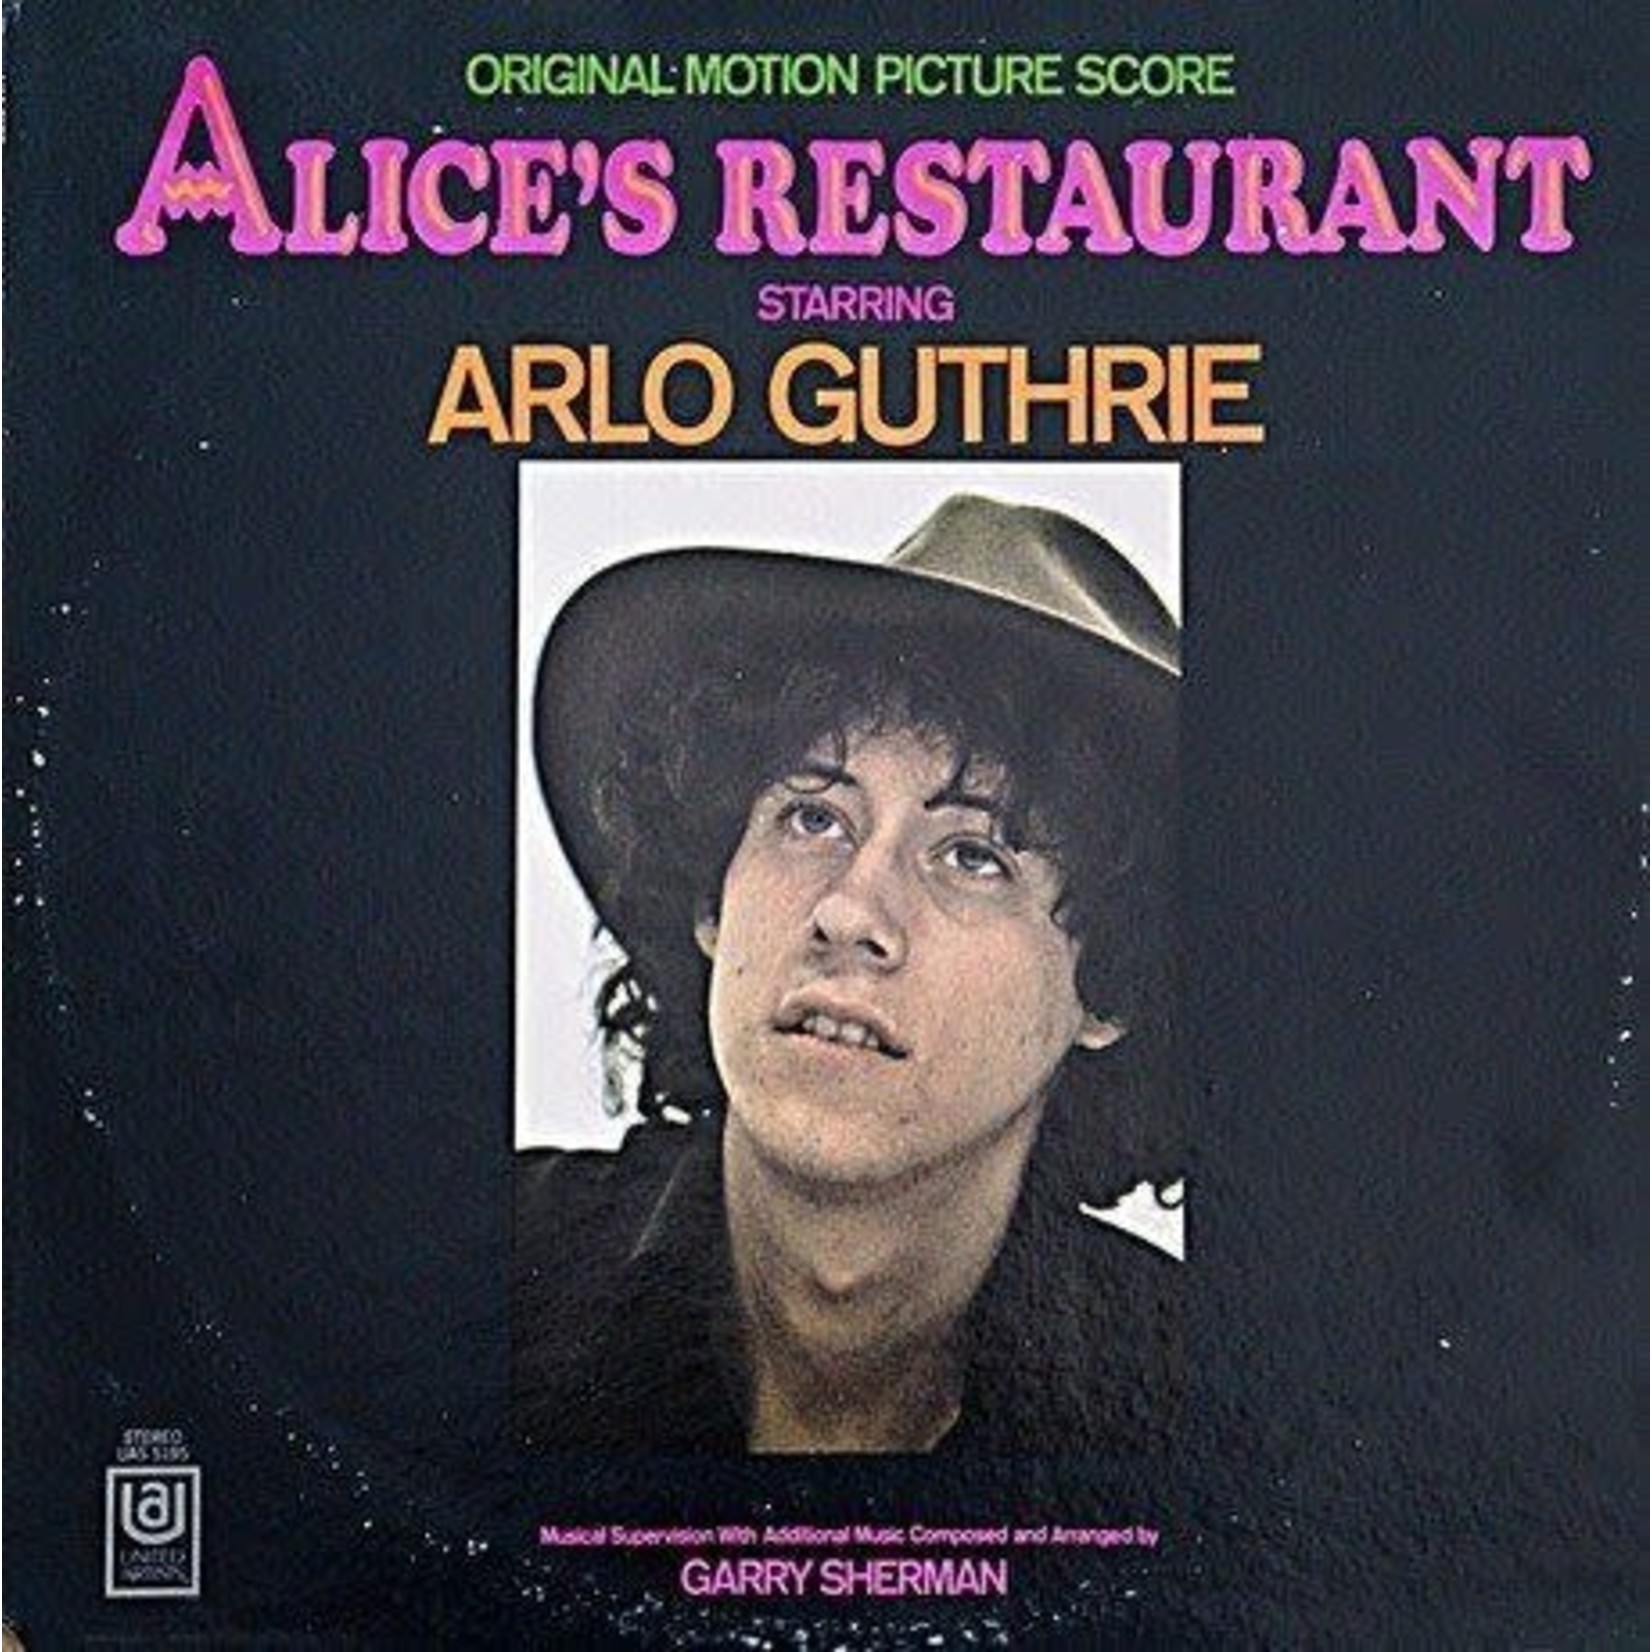 [Vintage] Arlo Guthrie - Alice's Restaurant (soundtrack)